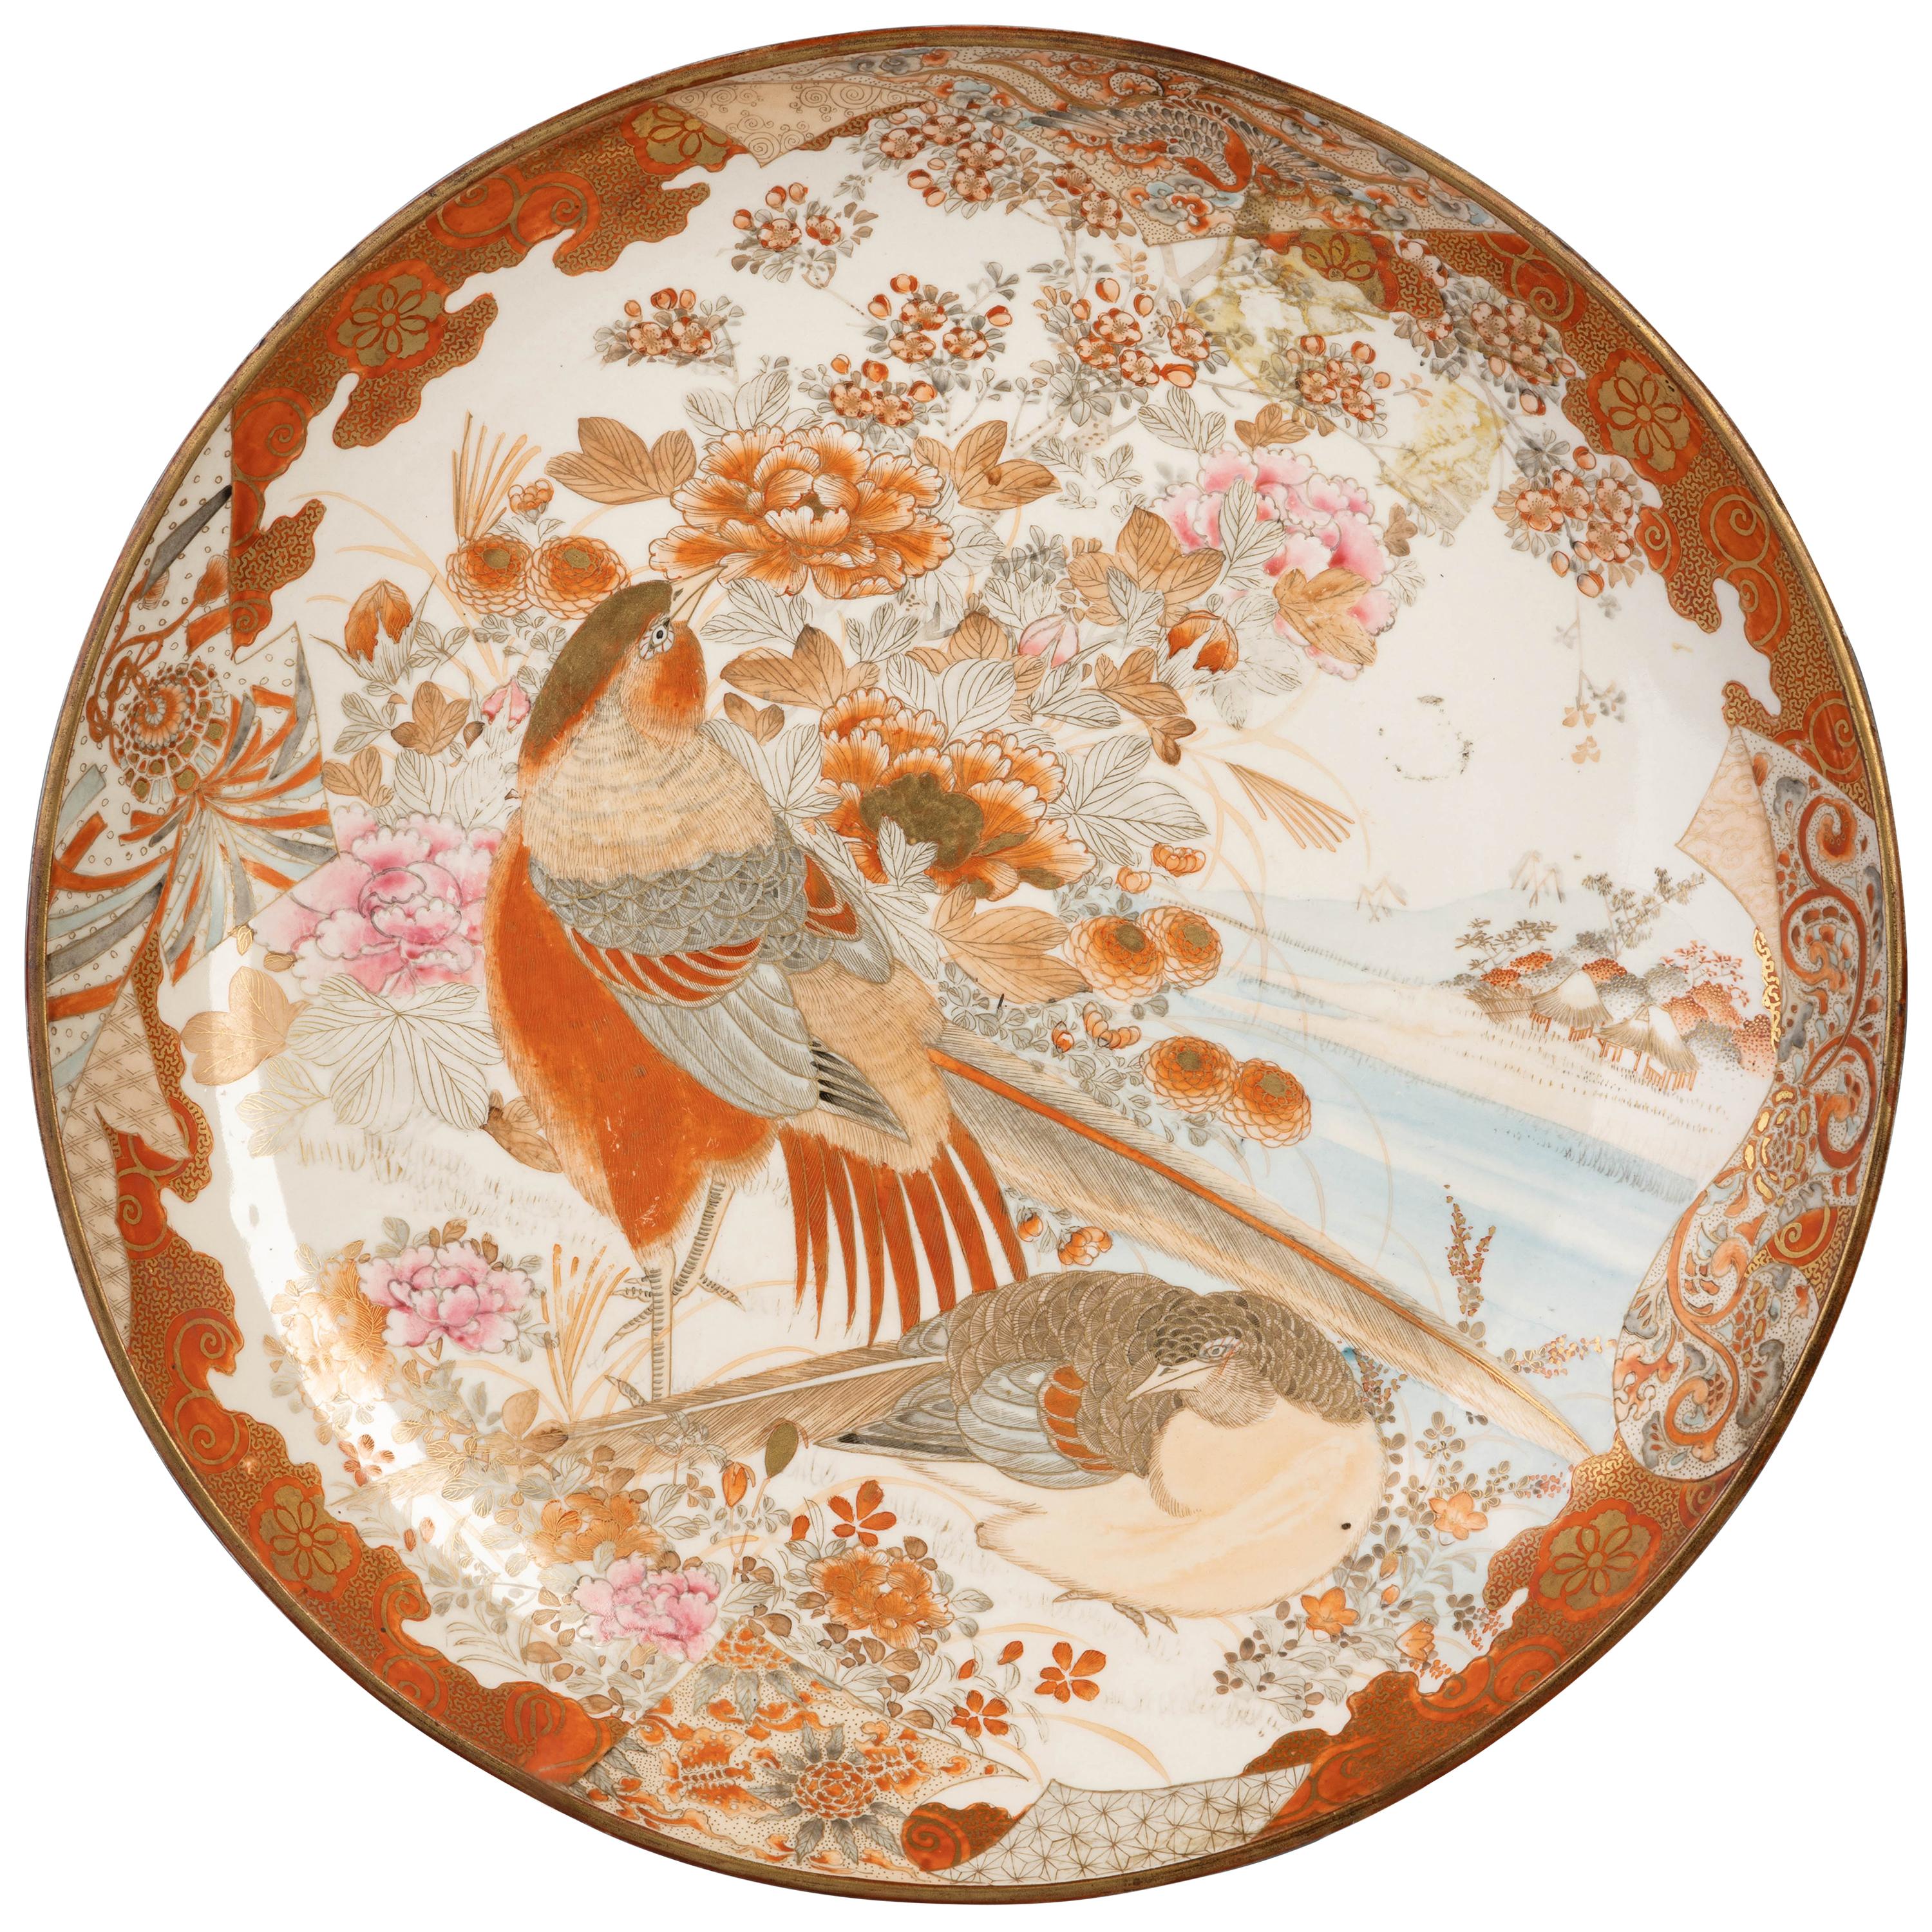 Japanese Porcelain Charger, circa 1880